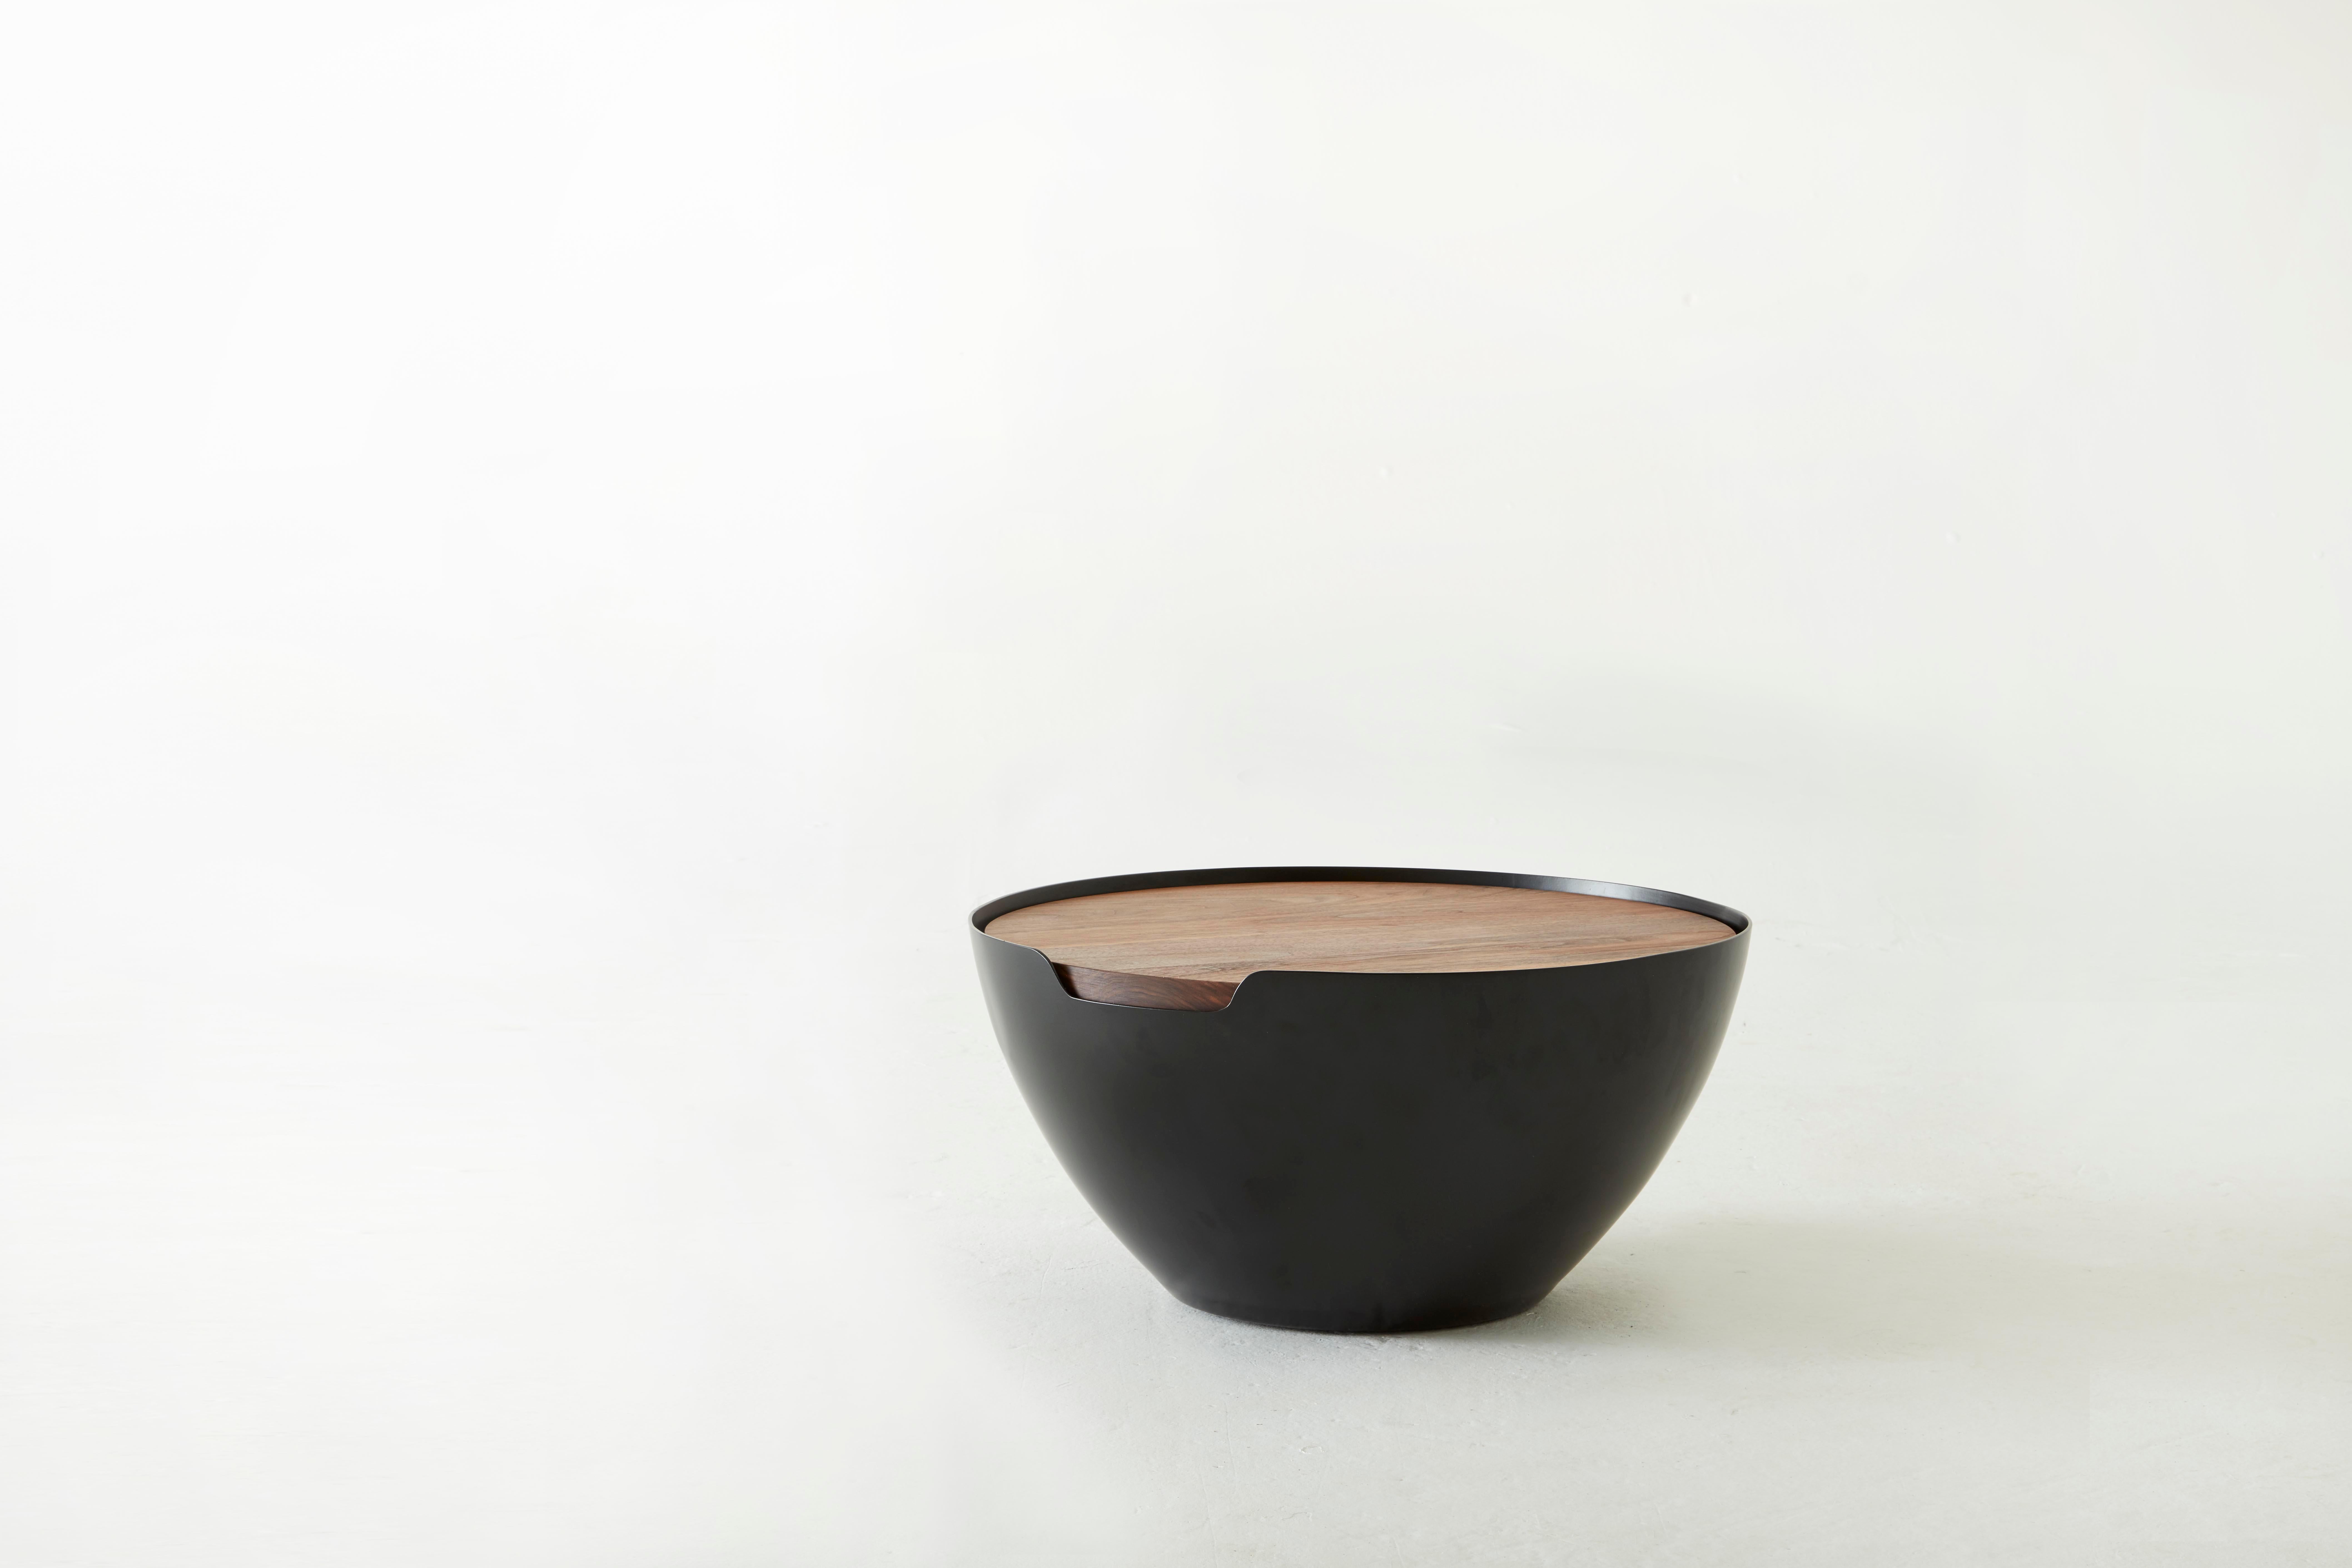 Walnut short basin coffee - side table by Hollis & Morris
Dimensions: diameter 26